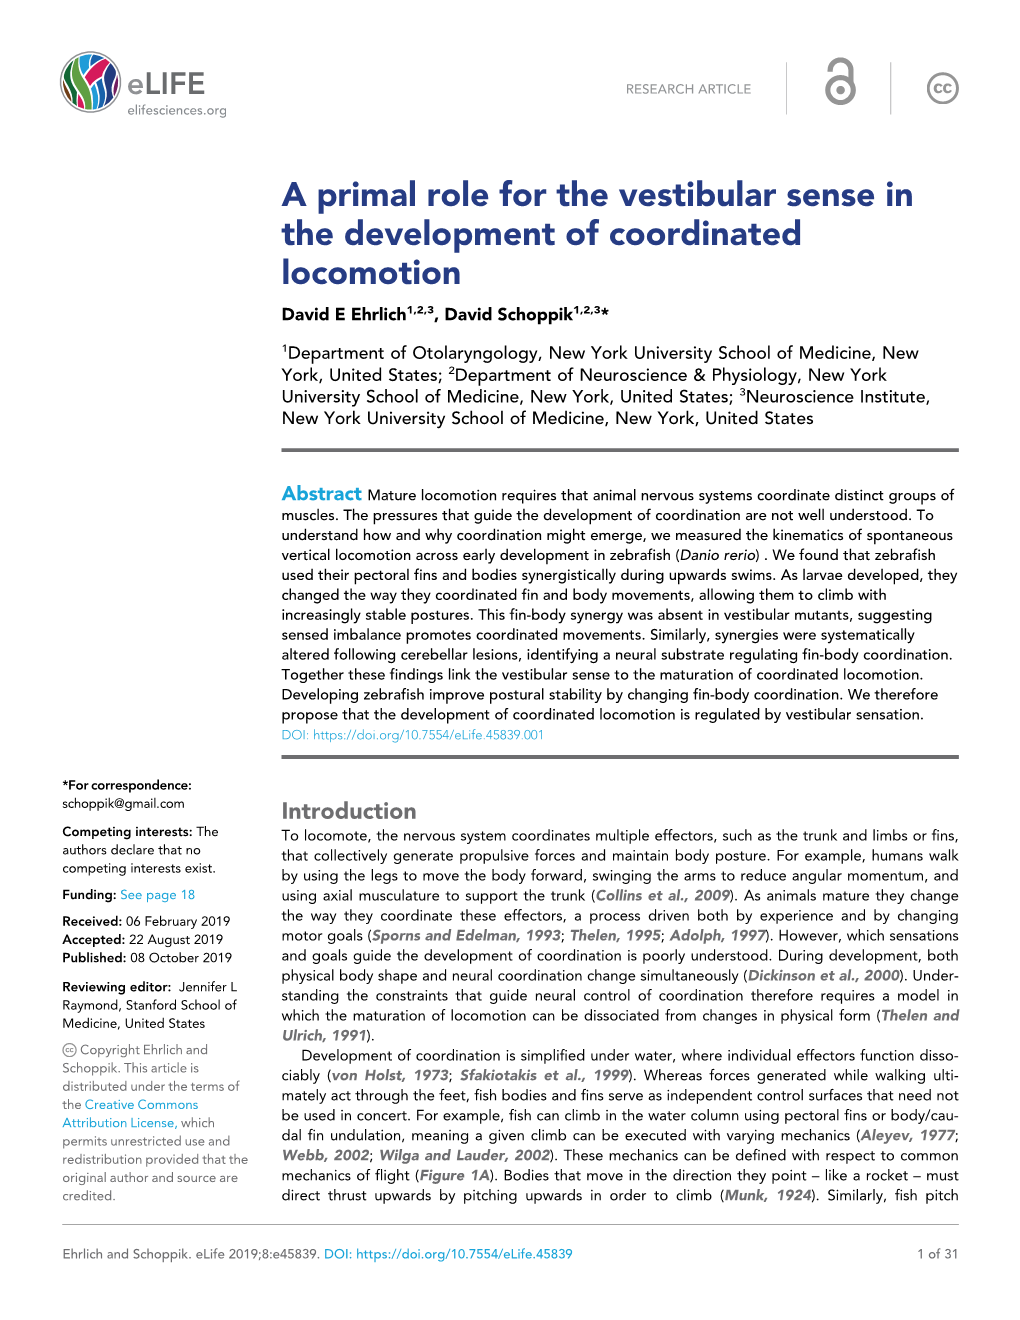 A Primal Role for the Vestibular Sense in the Development of Coordinated Locomotion David E Ehrlich1,2,3, David Schoppik1,2,3*